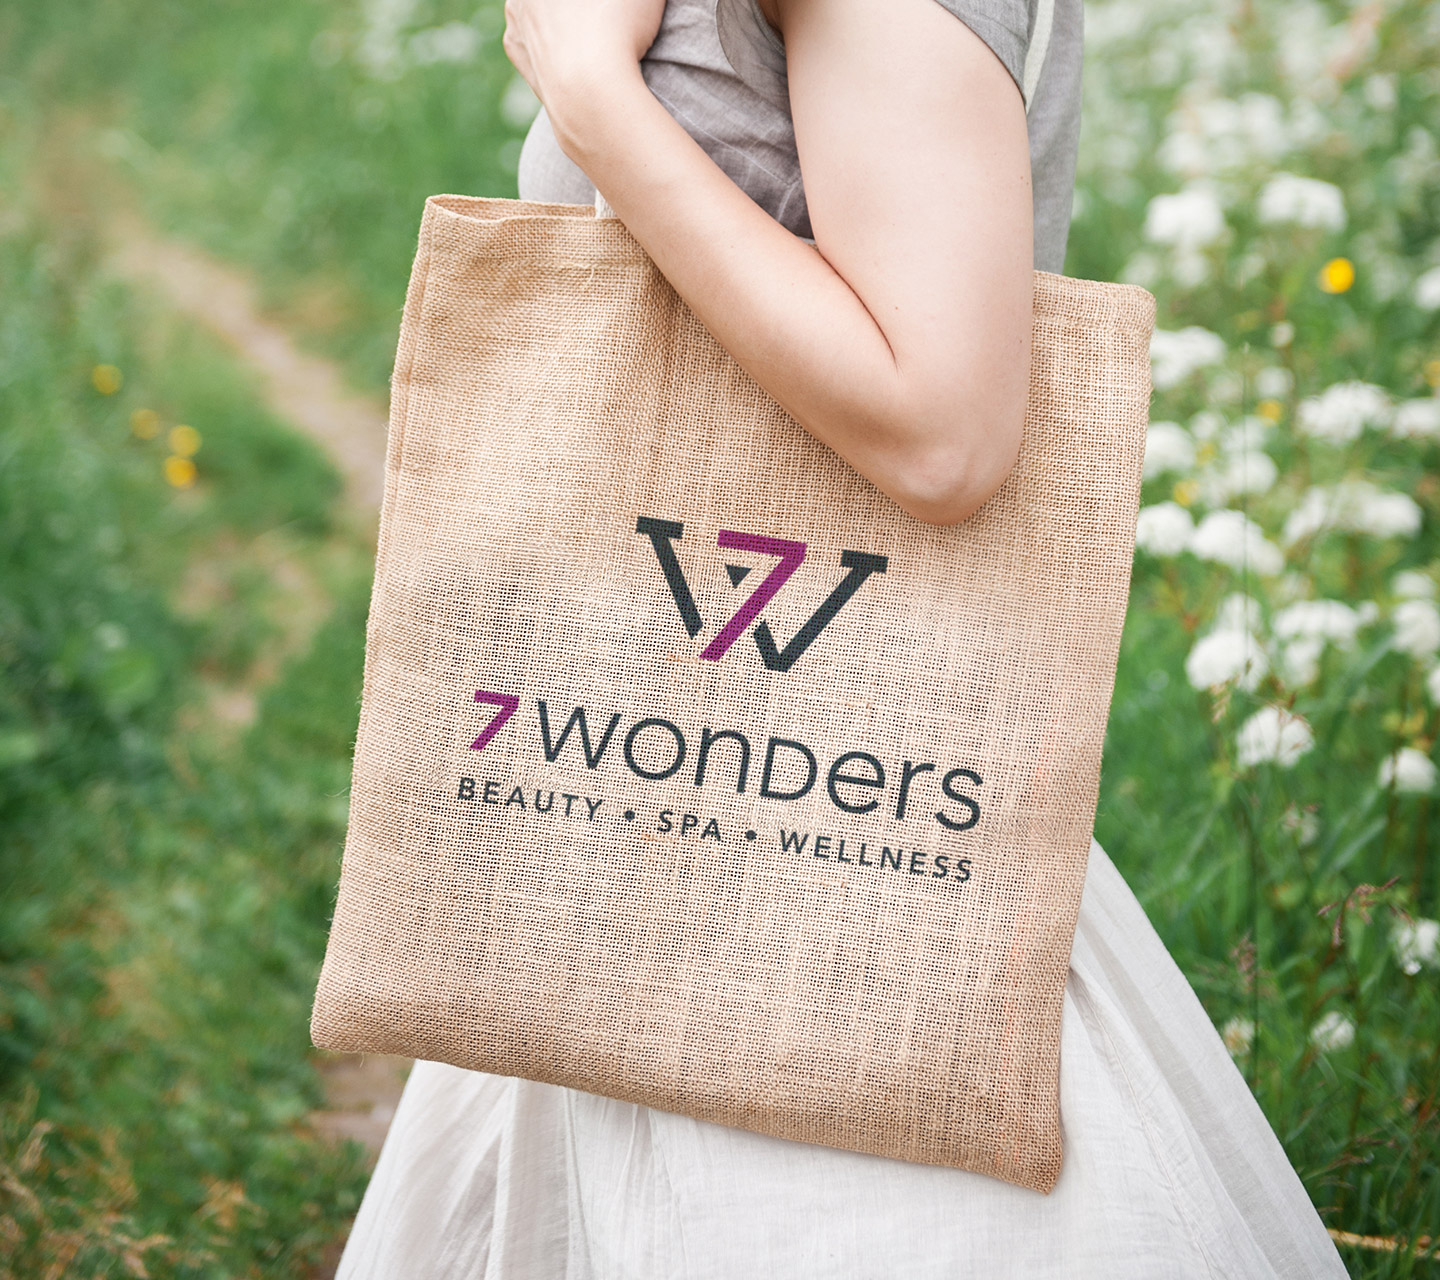 7 Wonders logo design on a bag